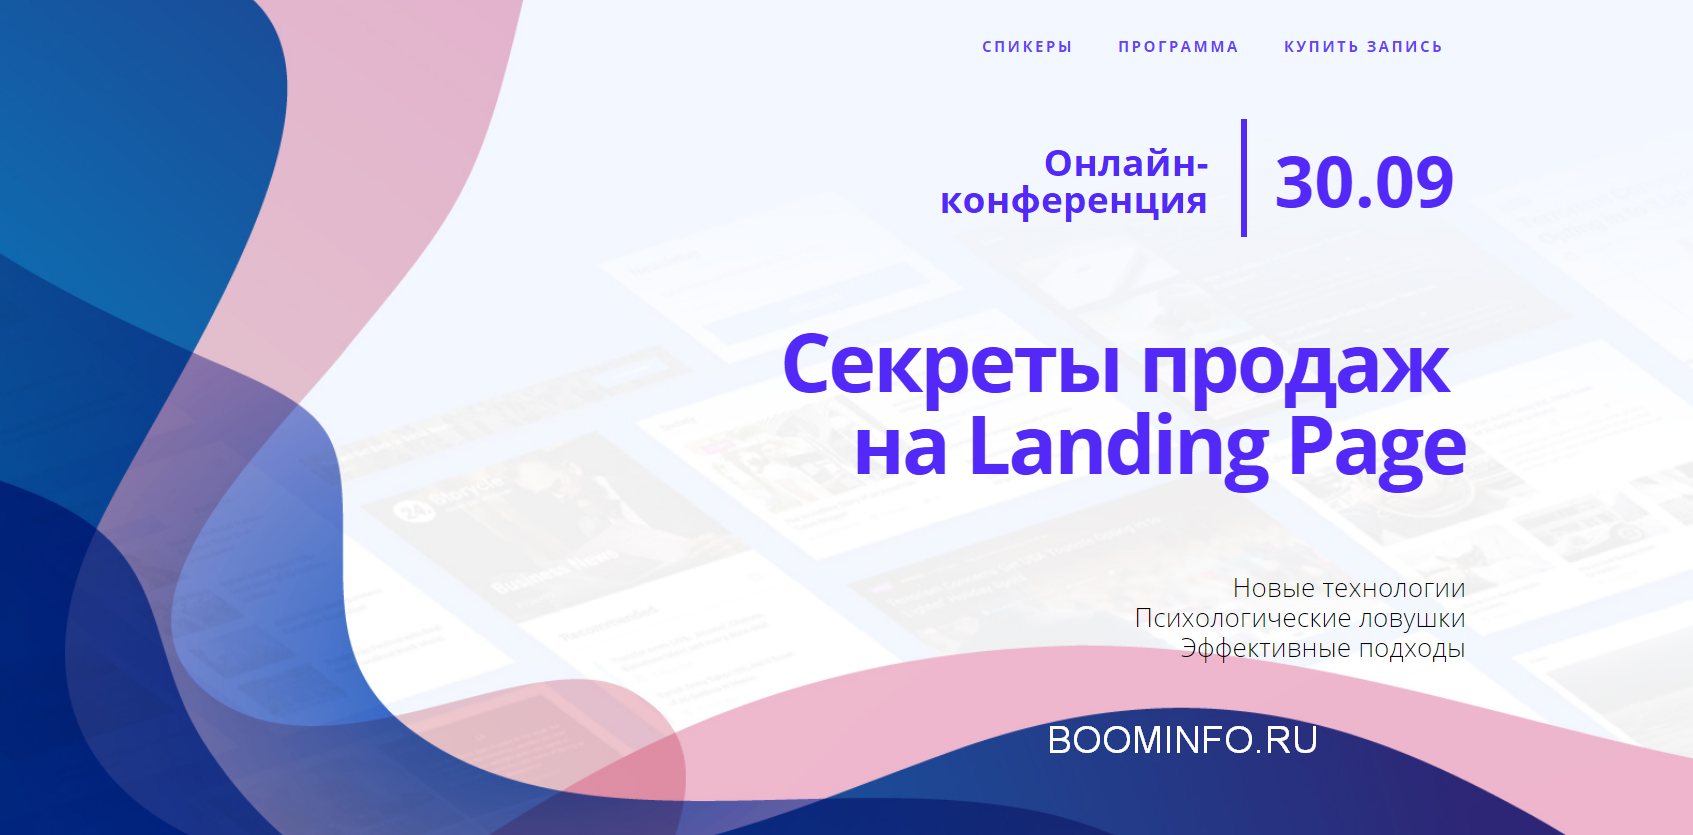 smart-payment-sekrety-prodazh-na-landing-page-2018-png.2941